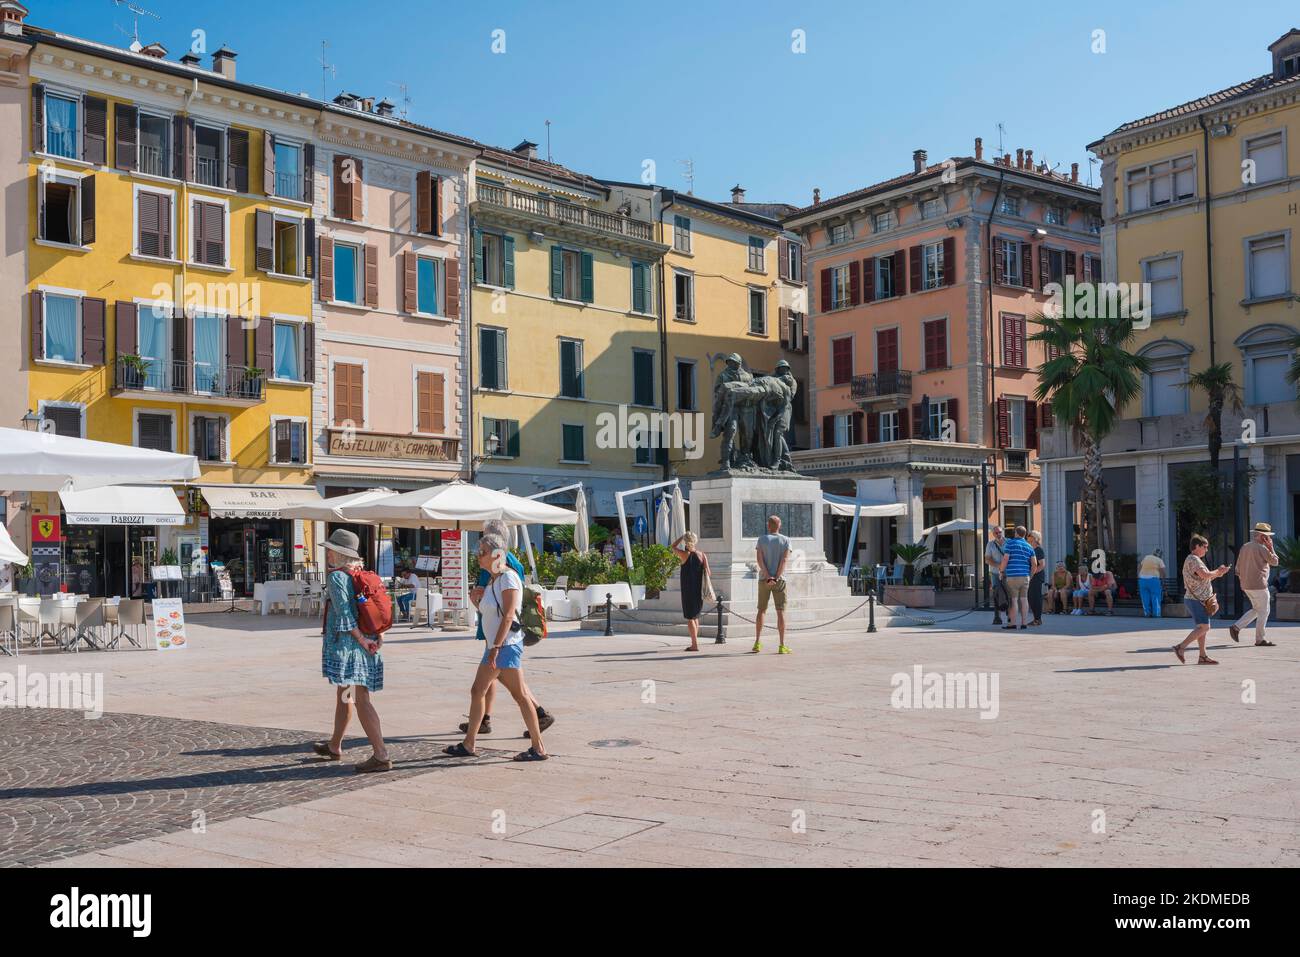 Salo Lake Garda, view in summer of people walking in the Piazza della Vittorio Monumento ai Caduti in the scenic lakeside town of Salo, Italy Stock Photo